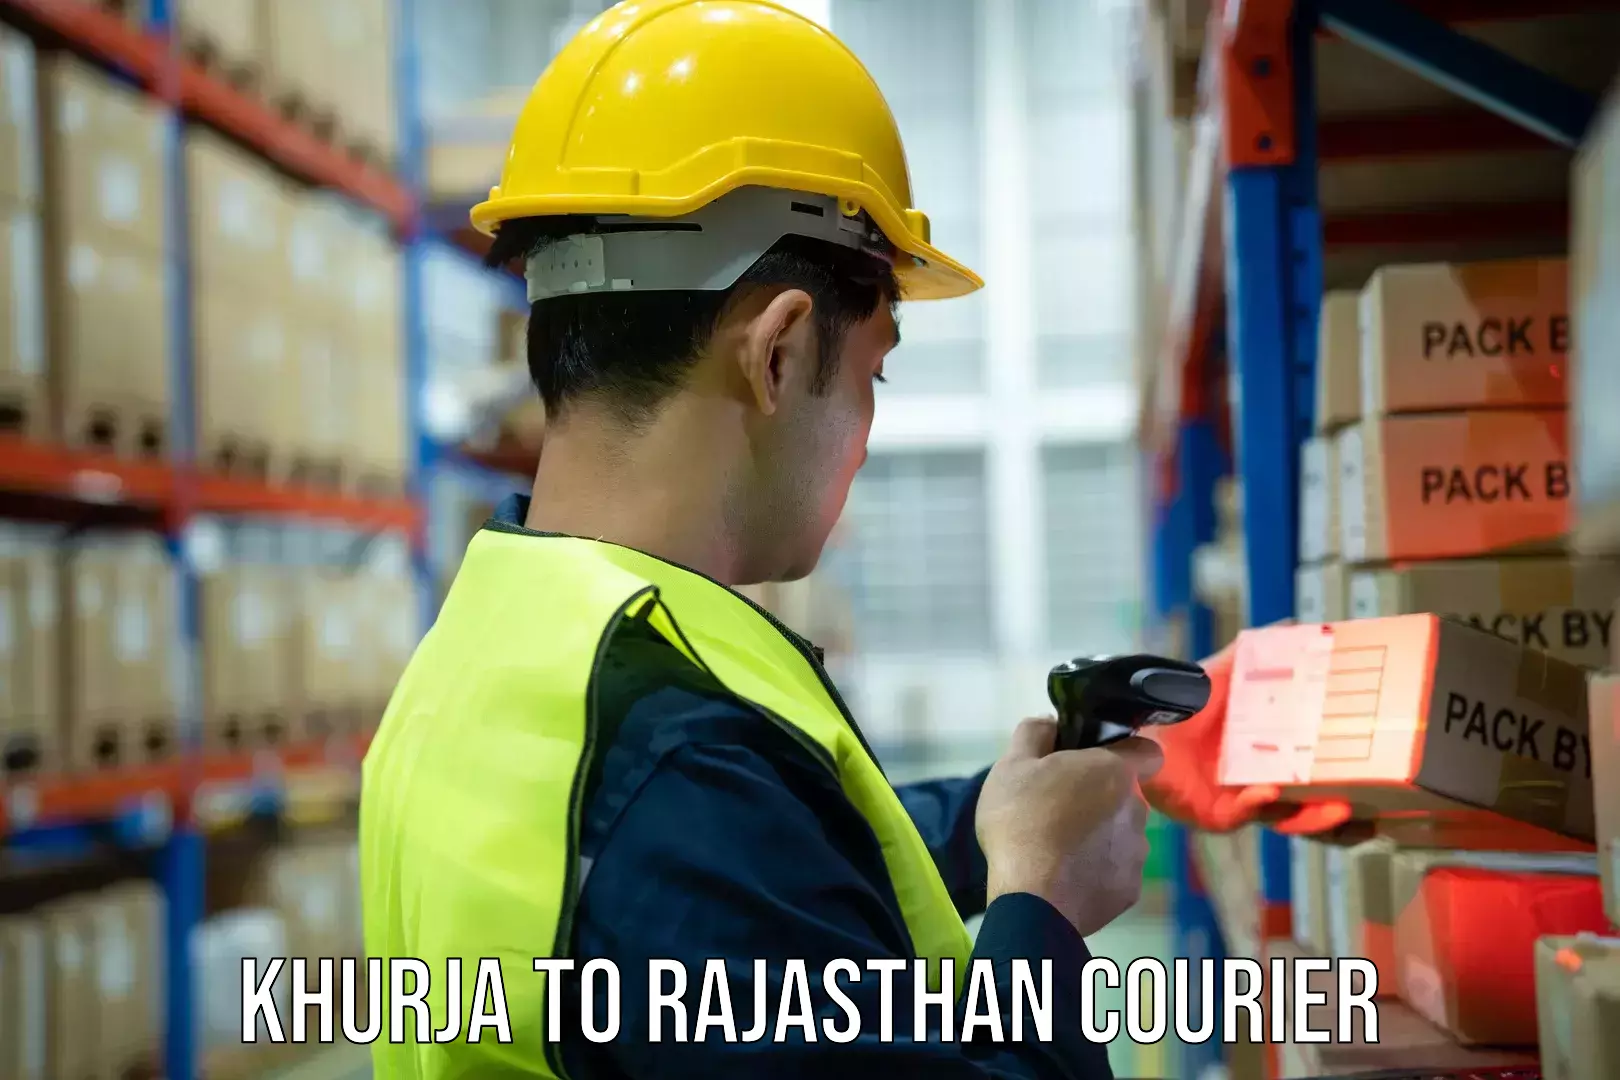 Courier service comparison Khurja to Khairthal